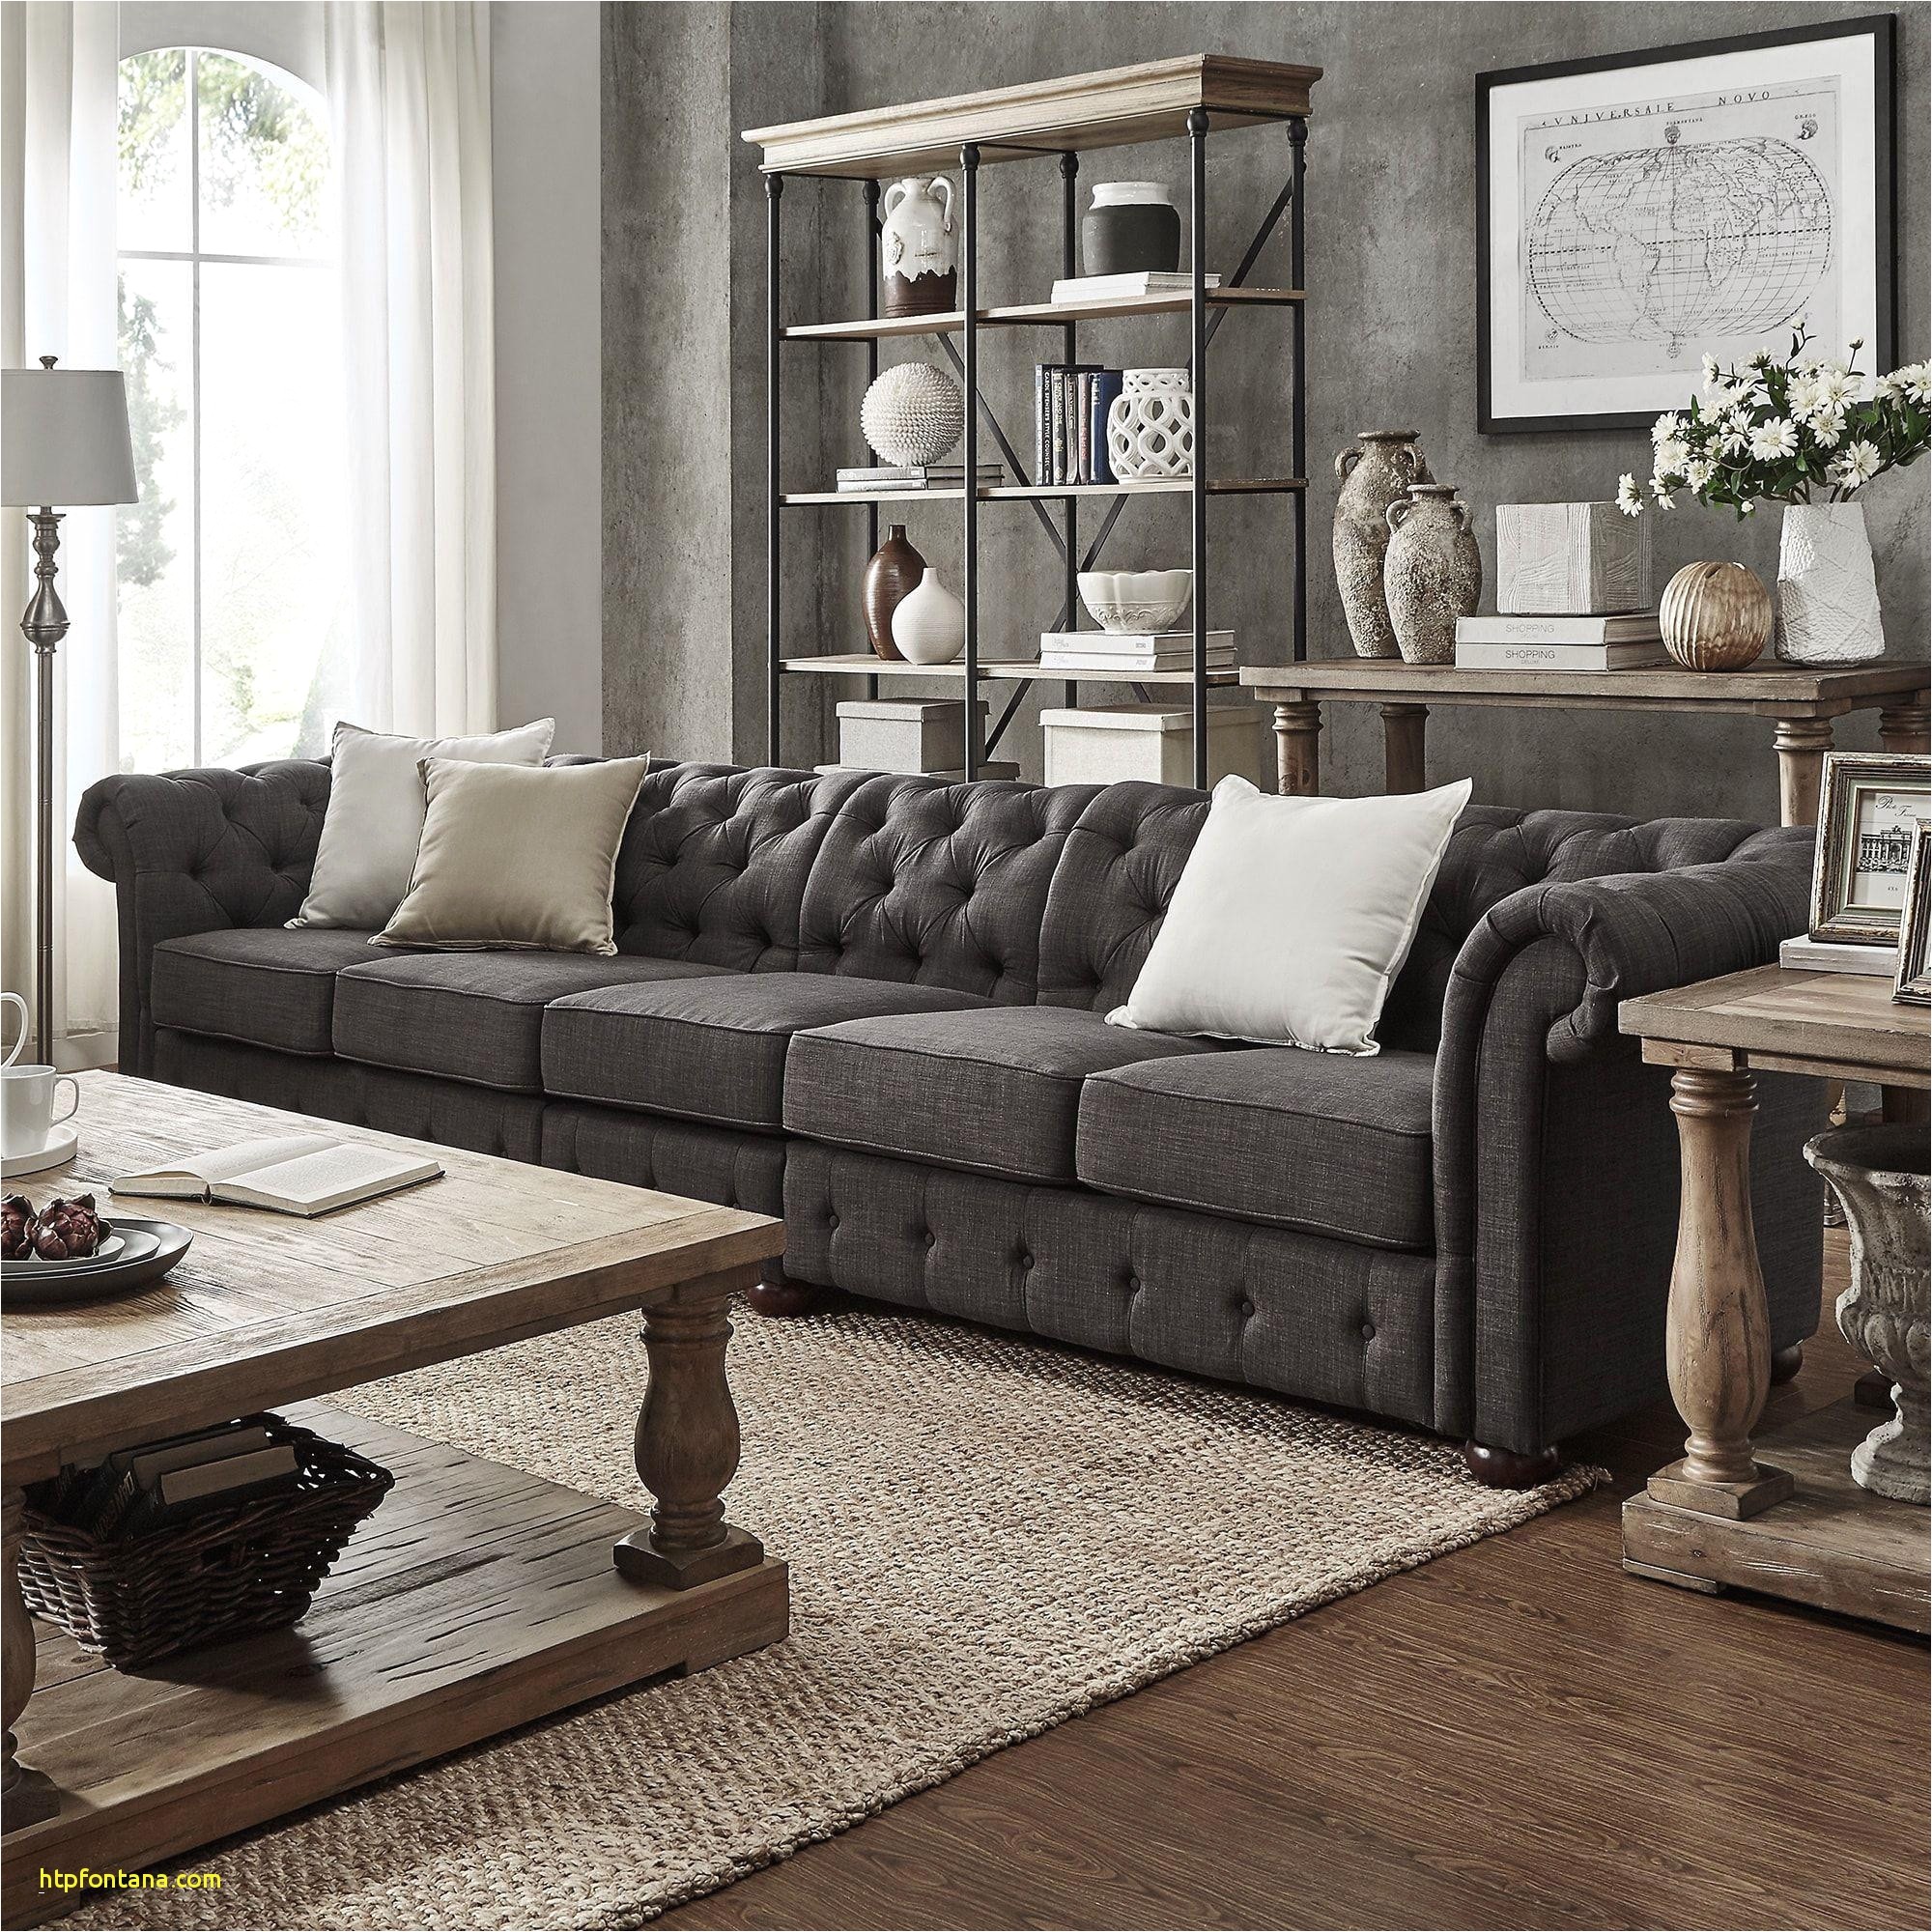 living room design gray couch fresh black sofas living room design fresh overstock couches 0d tags